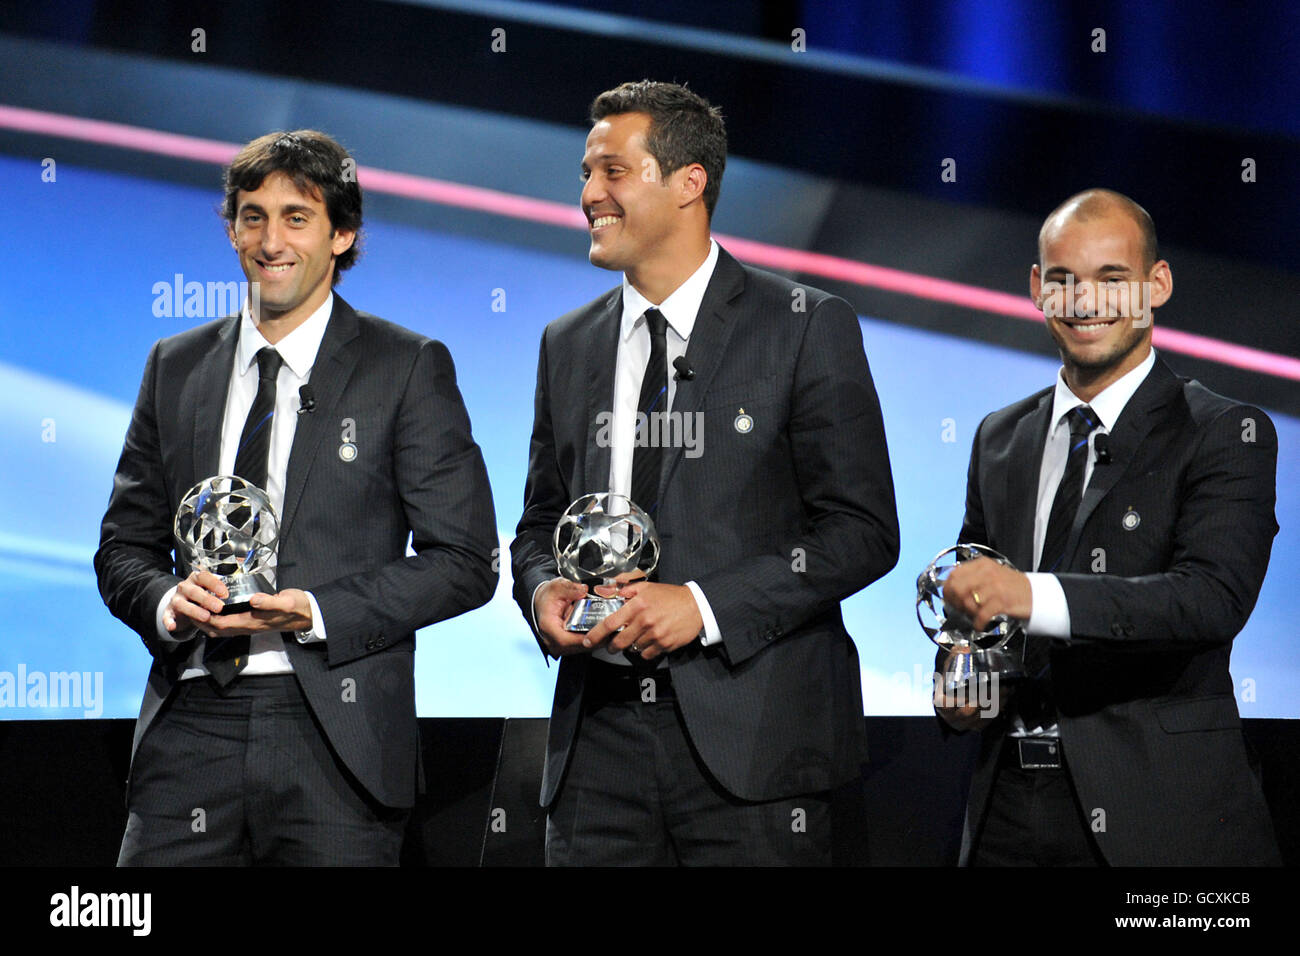 Soccer - UEFA Champions League Draw - Grimaldi Forum Stock Photo